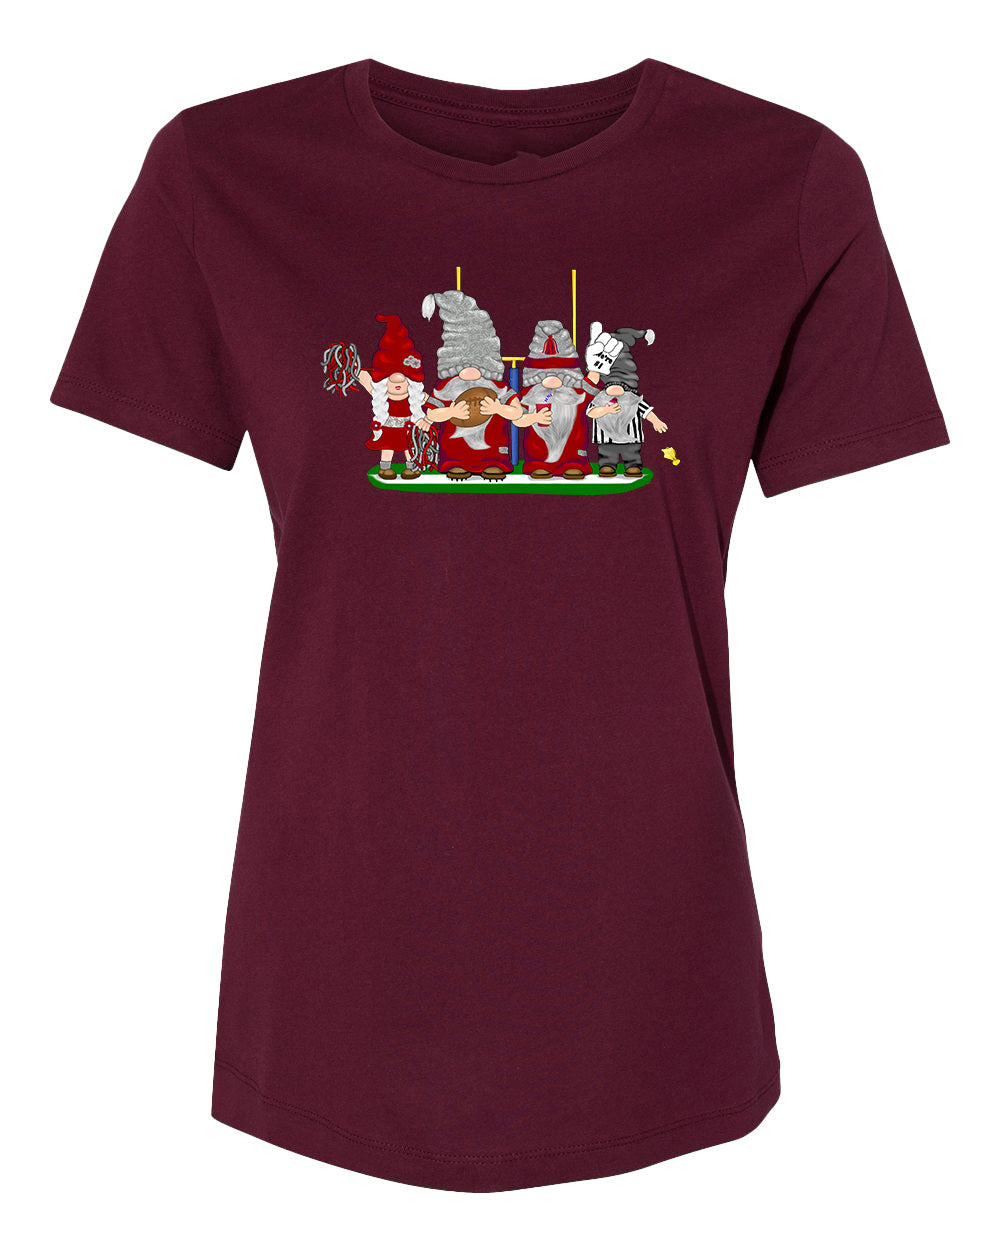 Crimson & Gray Football Gnomes on Women's T-shirt (similar to Pullman)